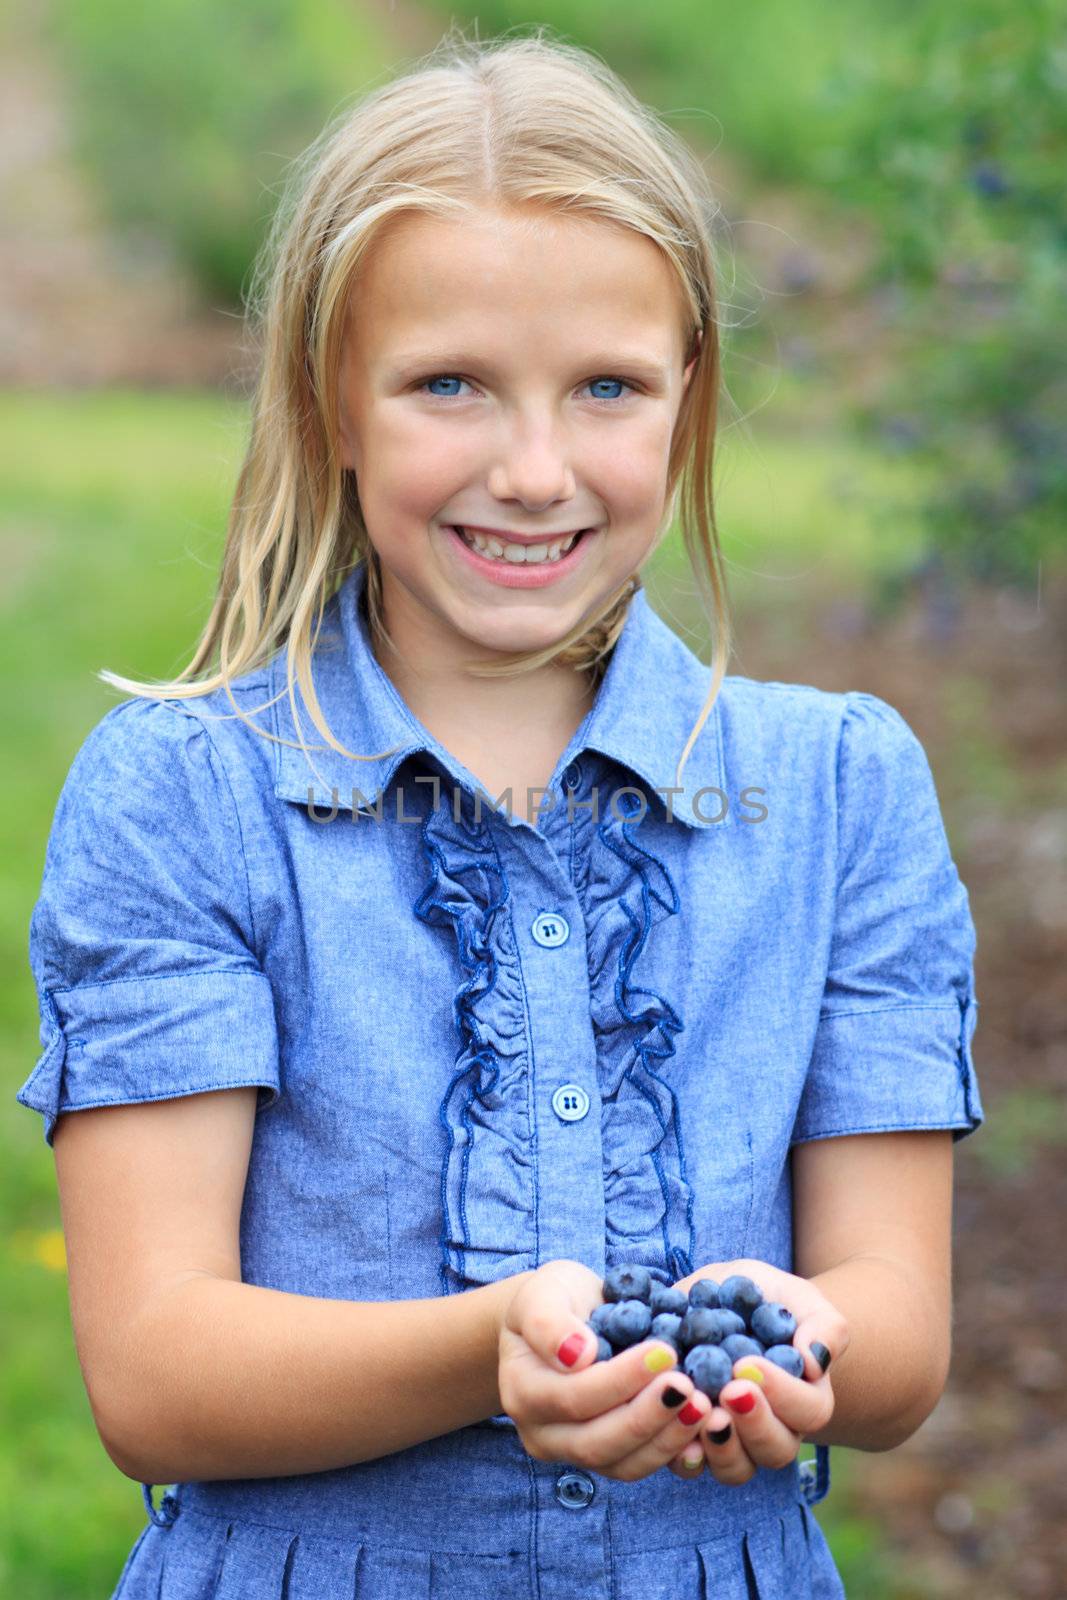 Blonde Girl with Fresh Picked Blueberries Smiling by melpomene